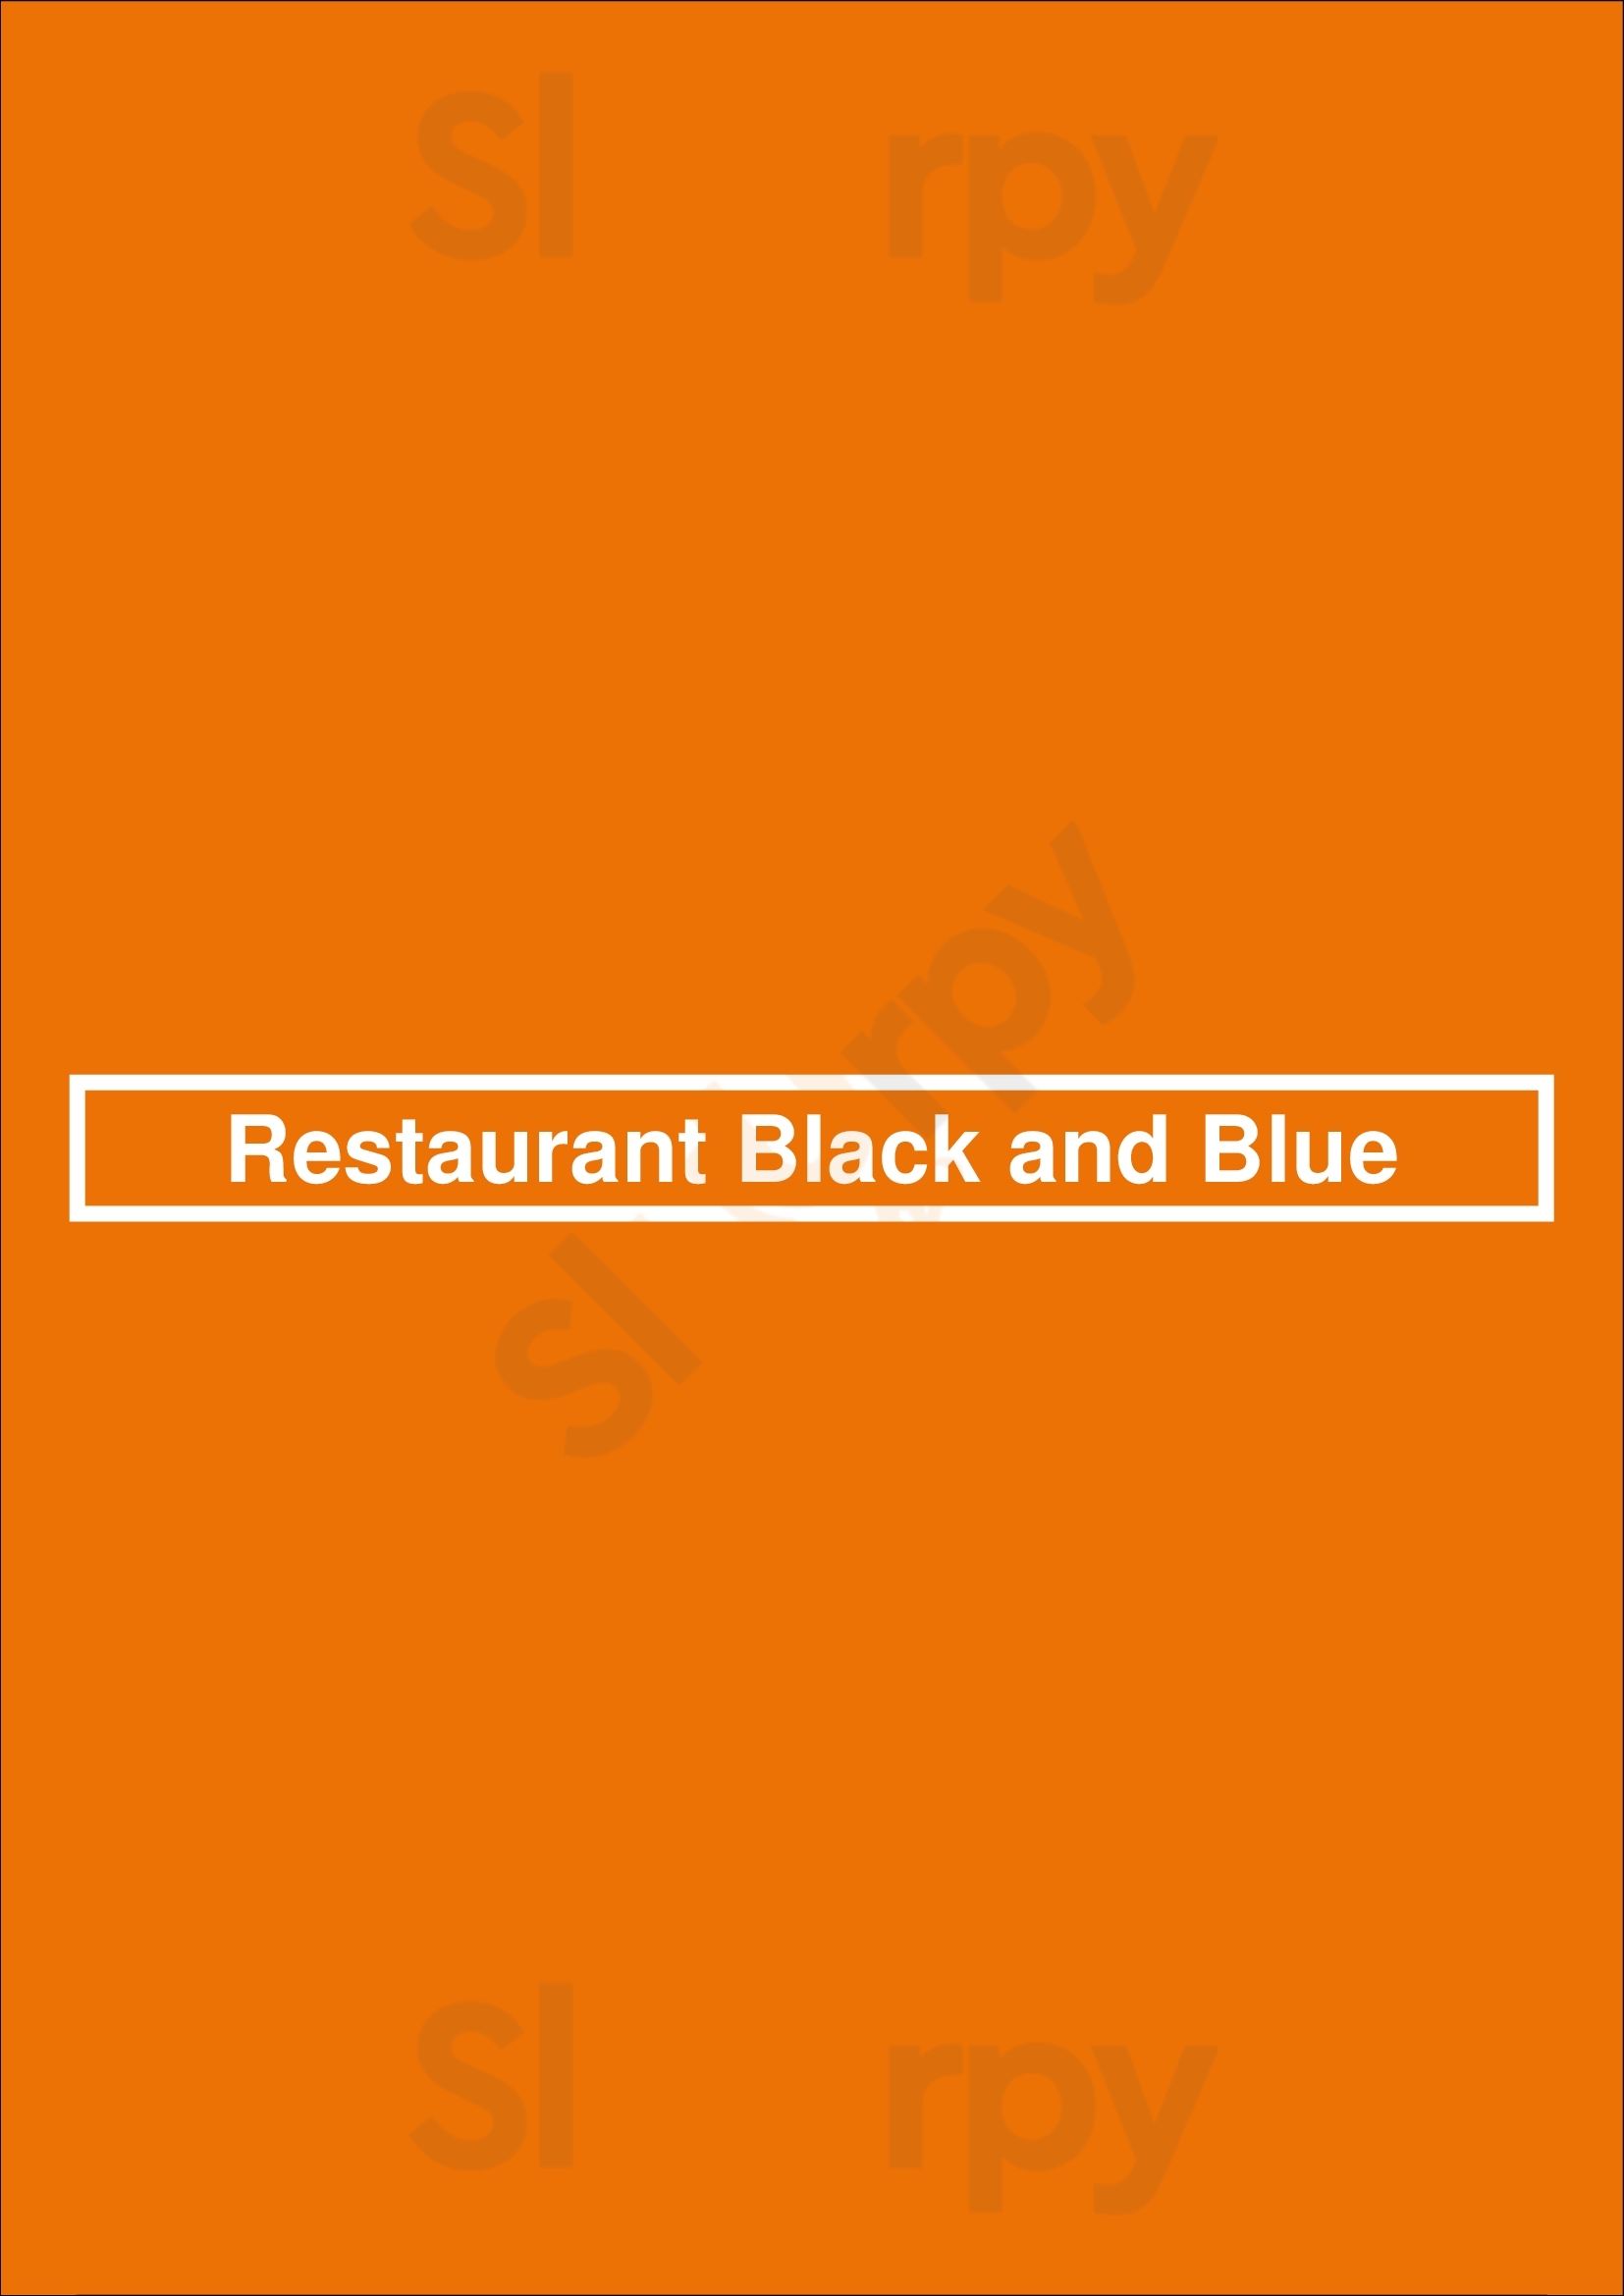 Restaurant Black And Blue Amsterdam Menu - 1